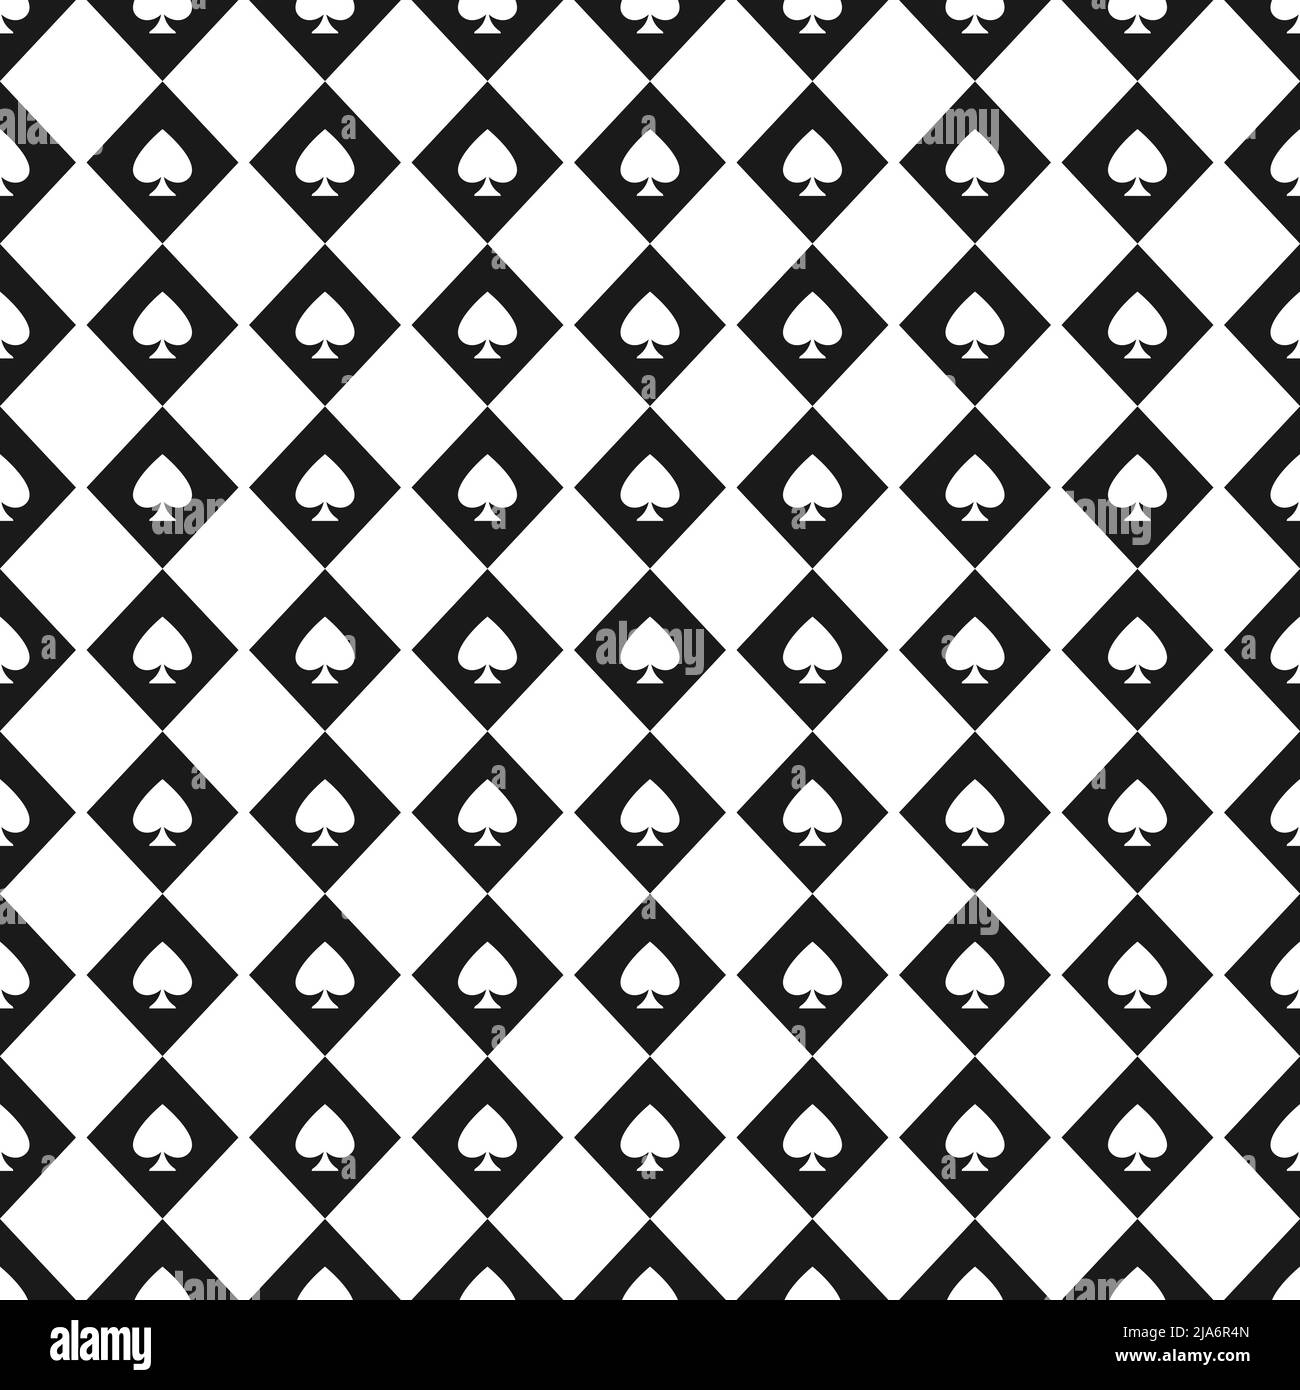 Seamless pattern with spades. Casino gambling, poker background. Alice in wonderland ornament. Fantasy wallpaper. Stock Vector